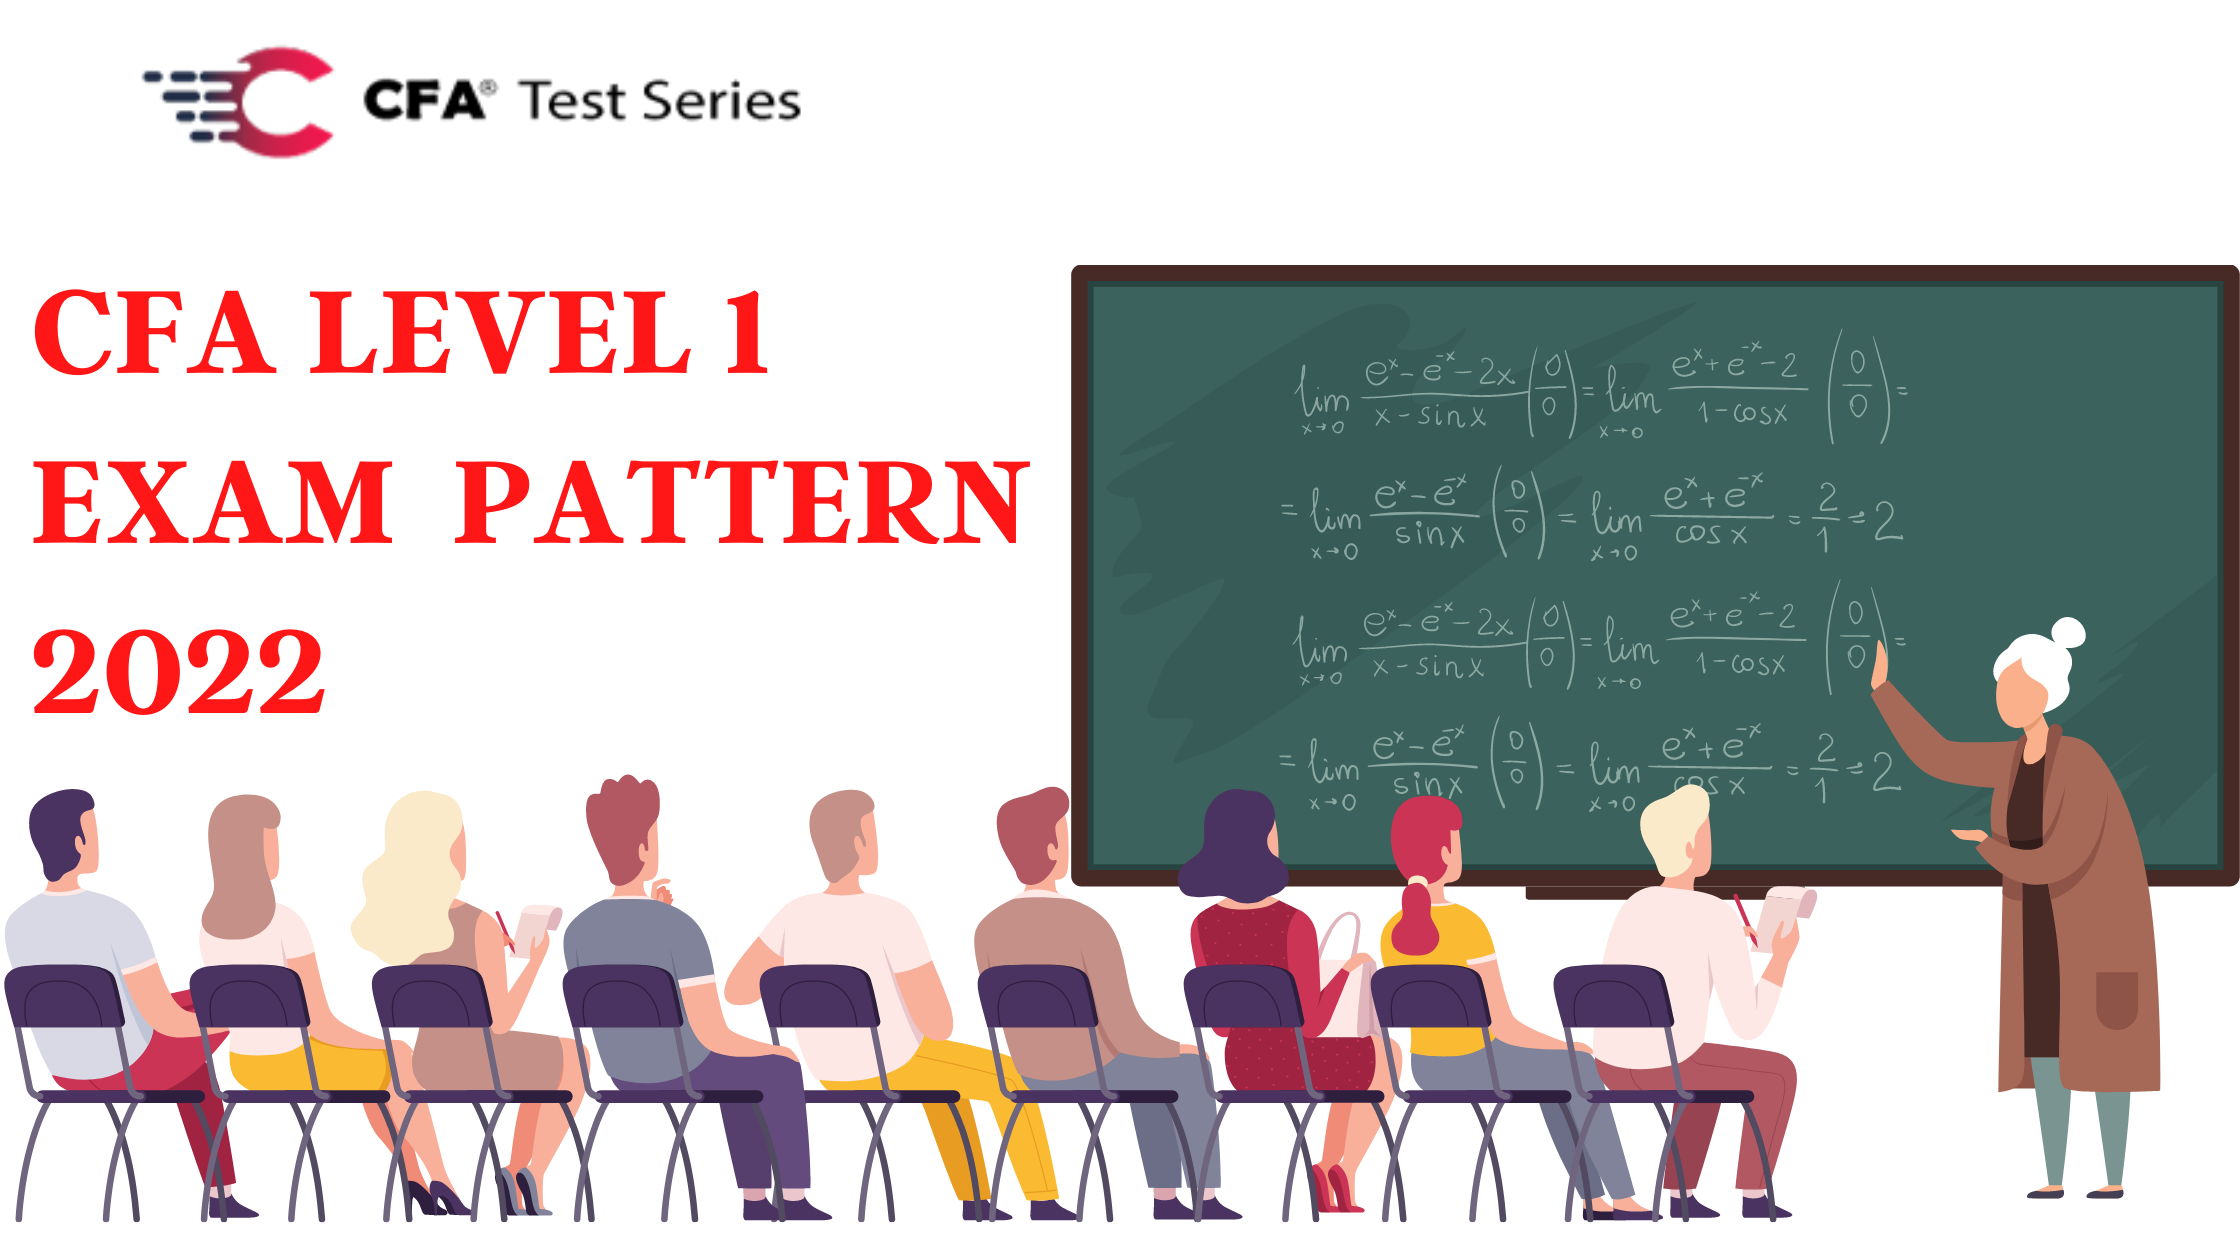 CFA Level 1 Exam Pattern 2022